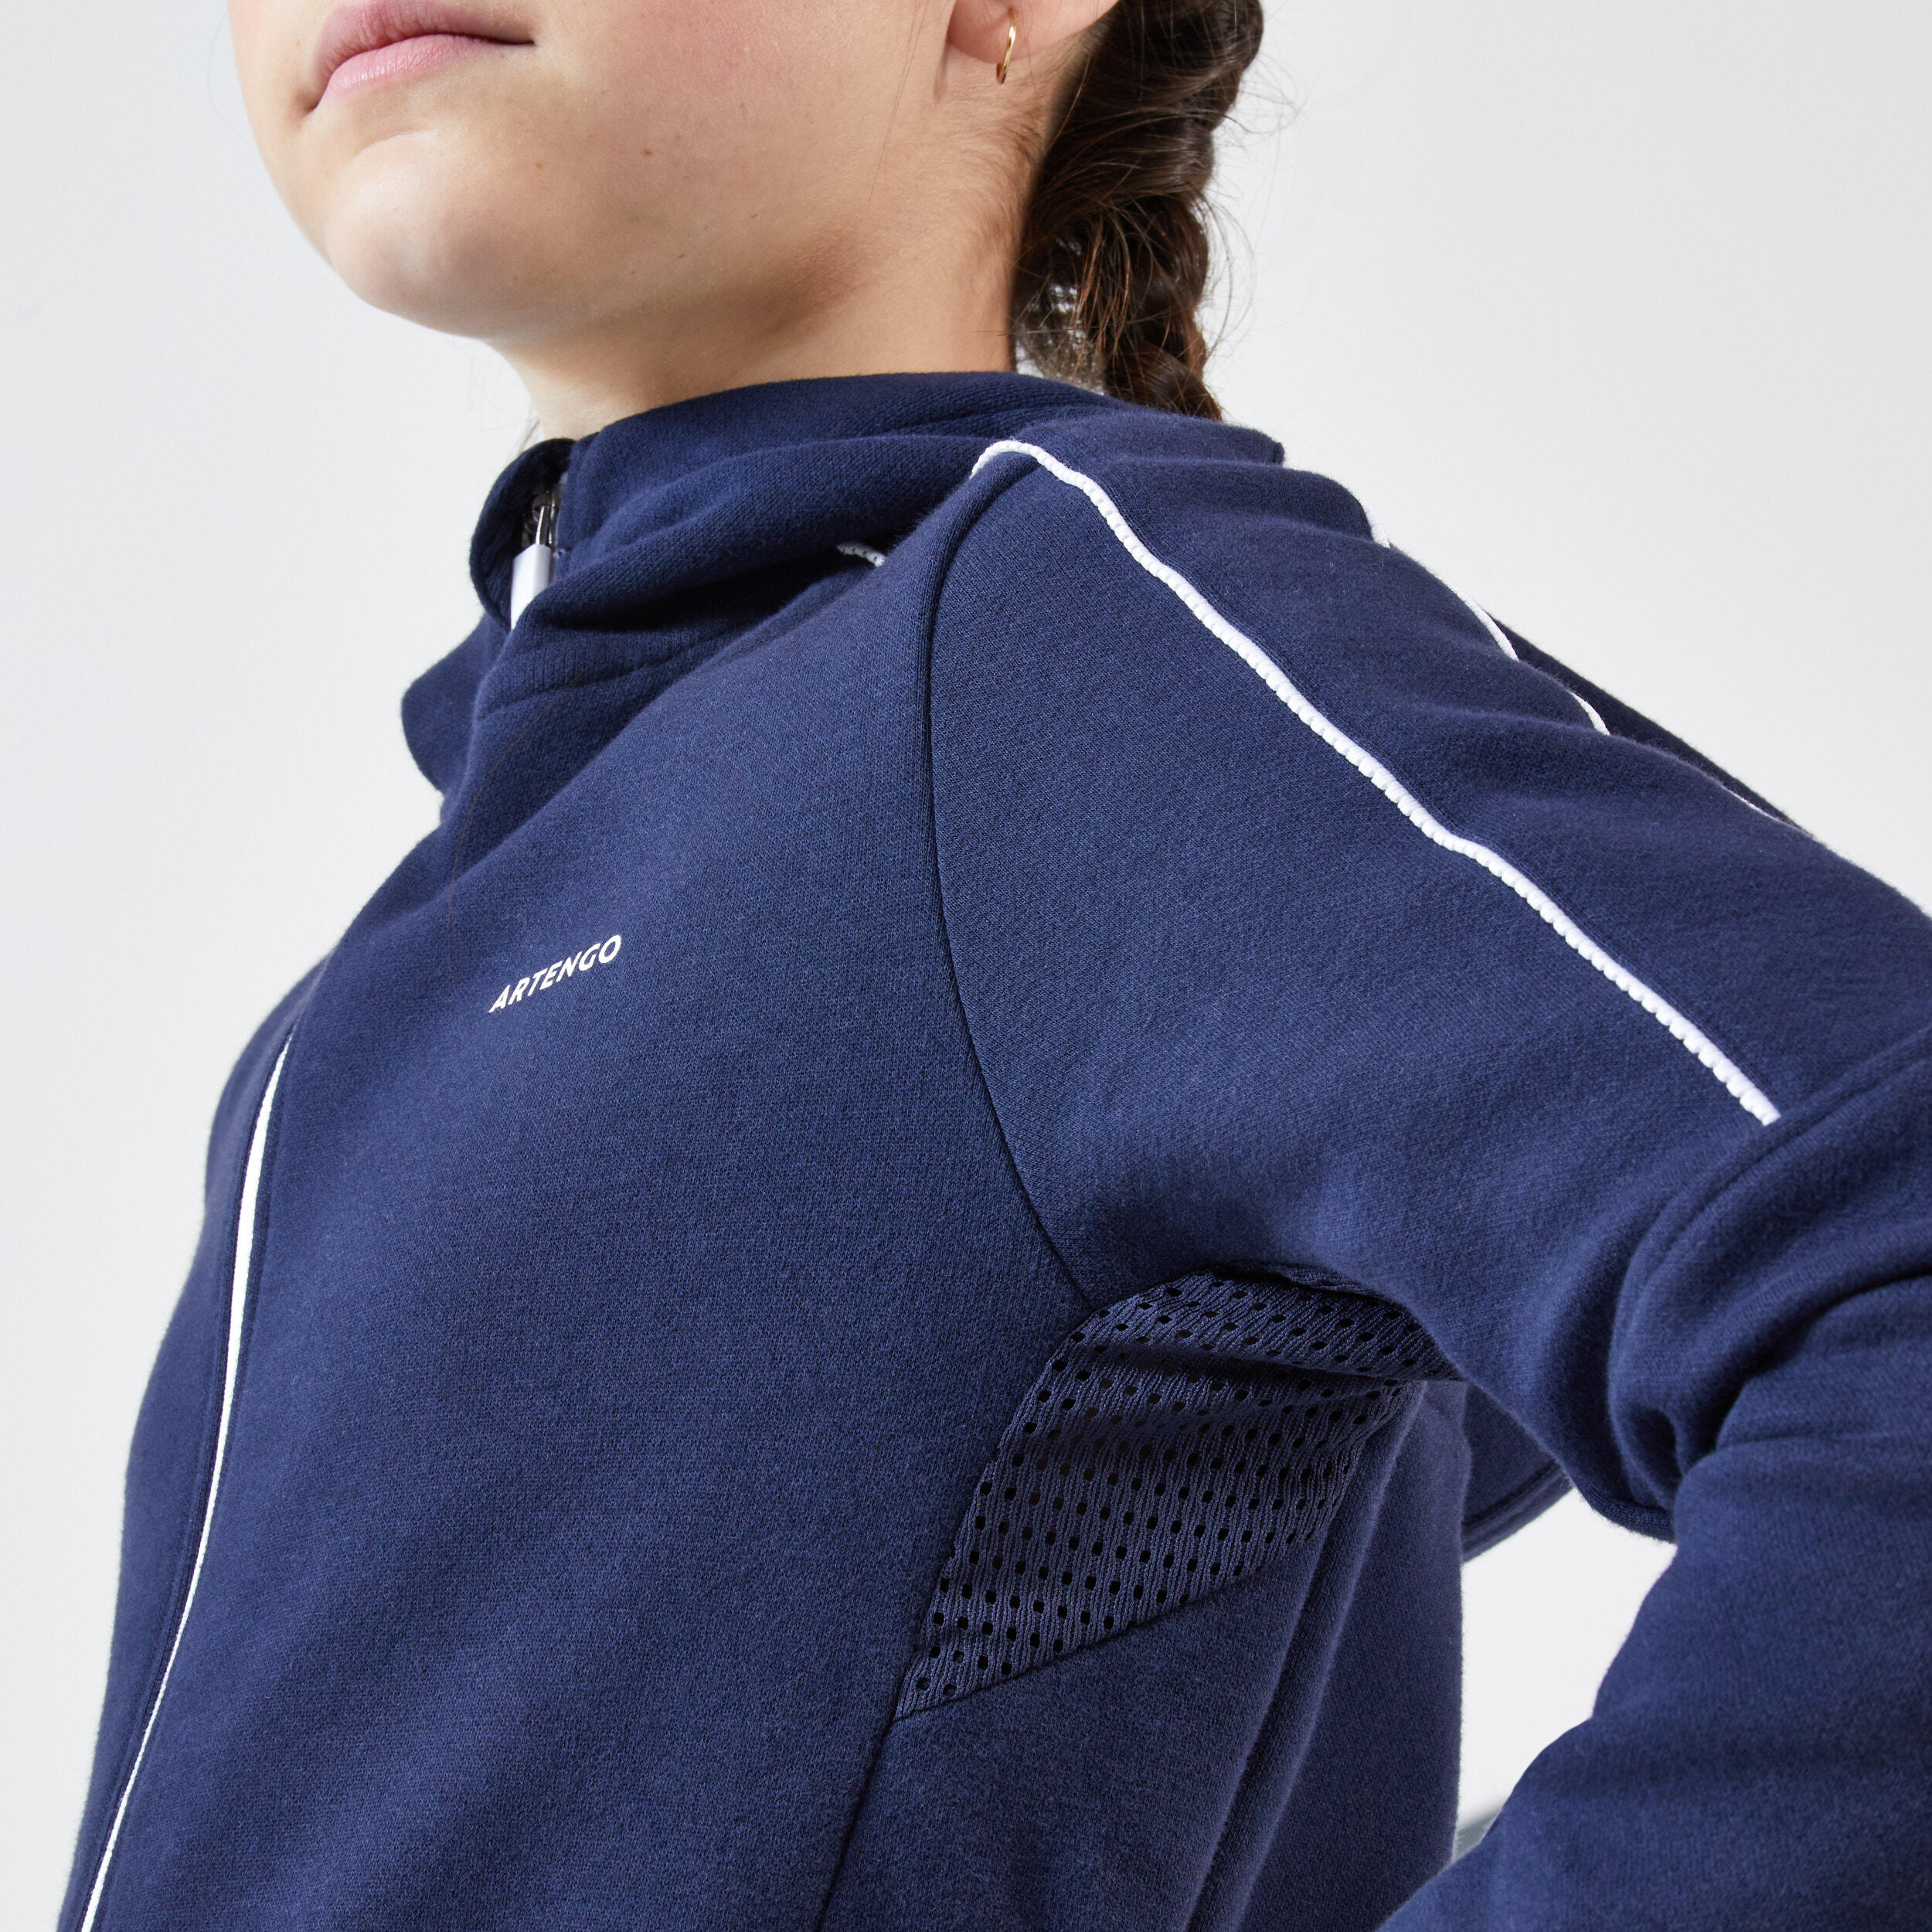 Kids' Warm Hooded Tennis Jacket - Blue 6/8